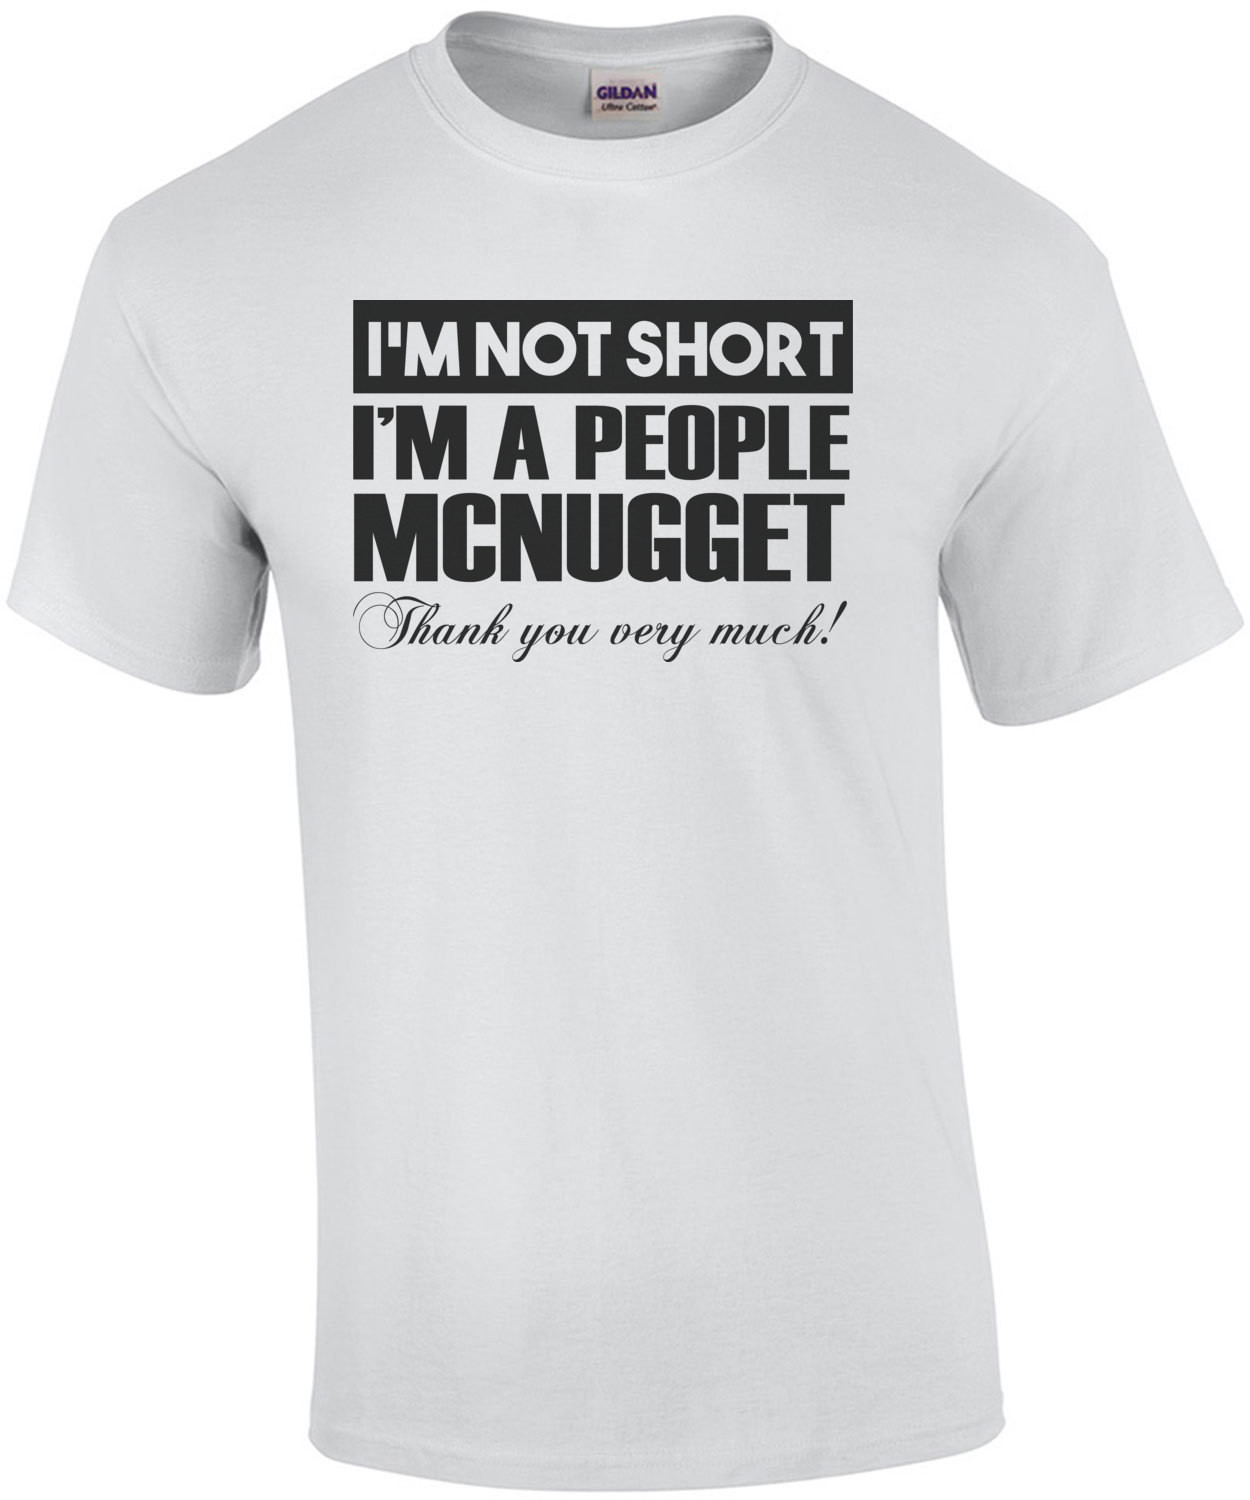 I'm not short I'm a people mcnugget t-shirt